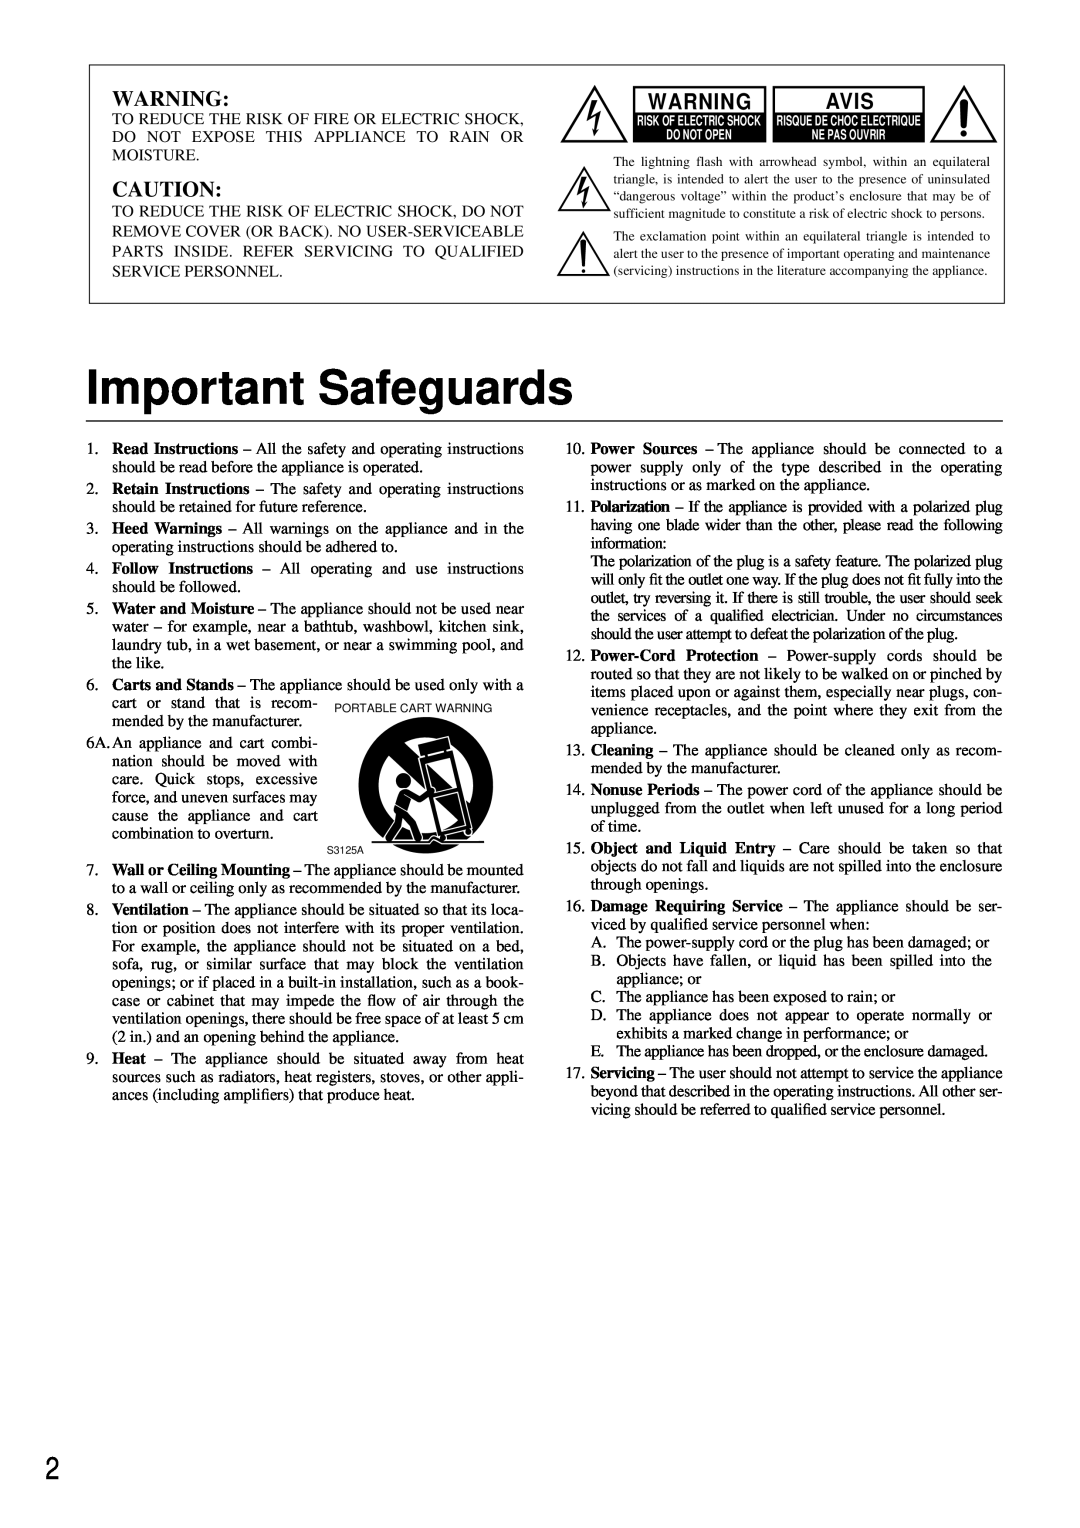 Integra CDC-3.4 appendix Important Safeguards, Avis 